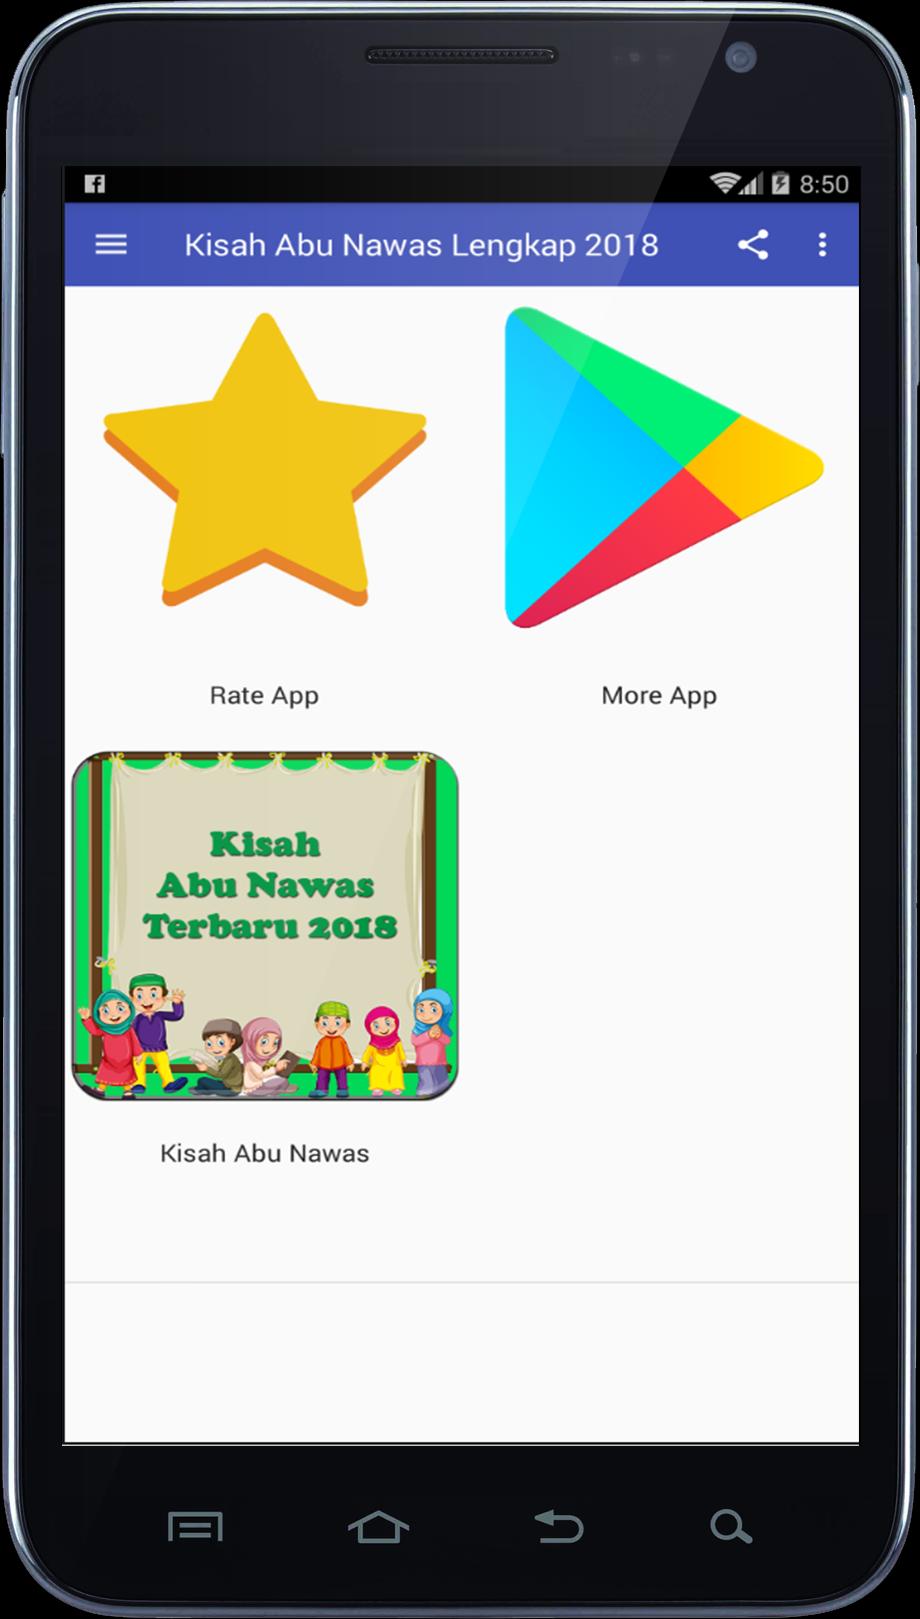 Kisah Abu Nawas Lengkap 2018 For Android Apk Download